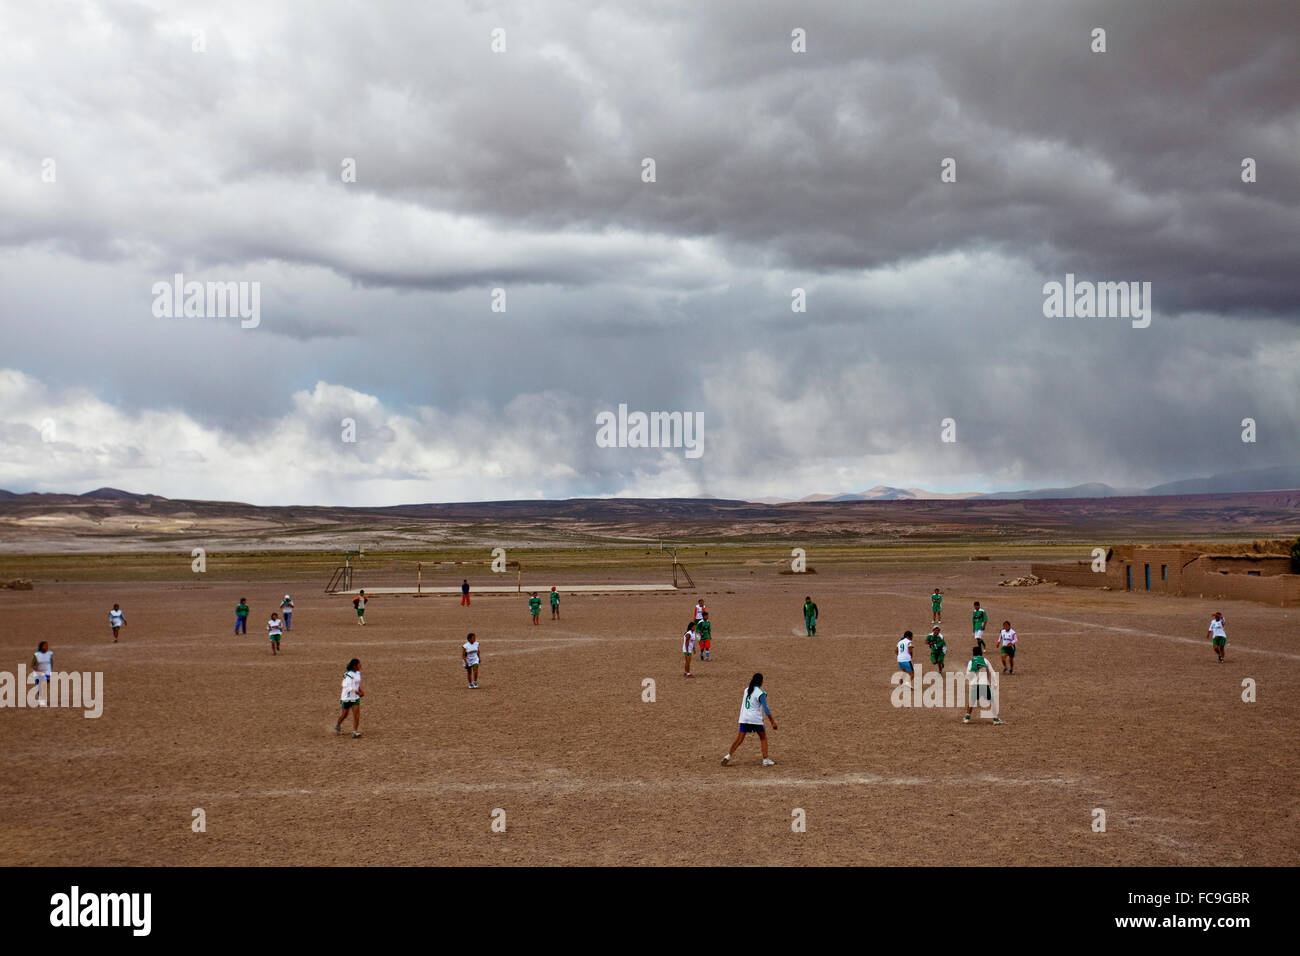 A soccer match in a community near the Atacama Desert in Bolivia. Stock Photo